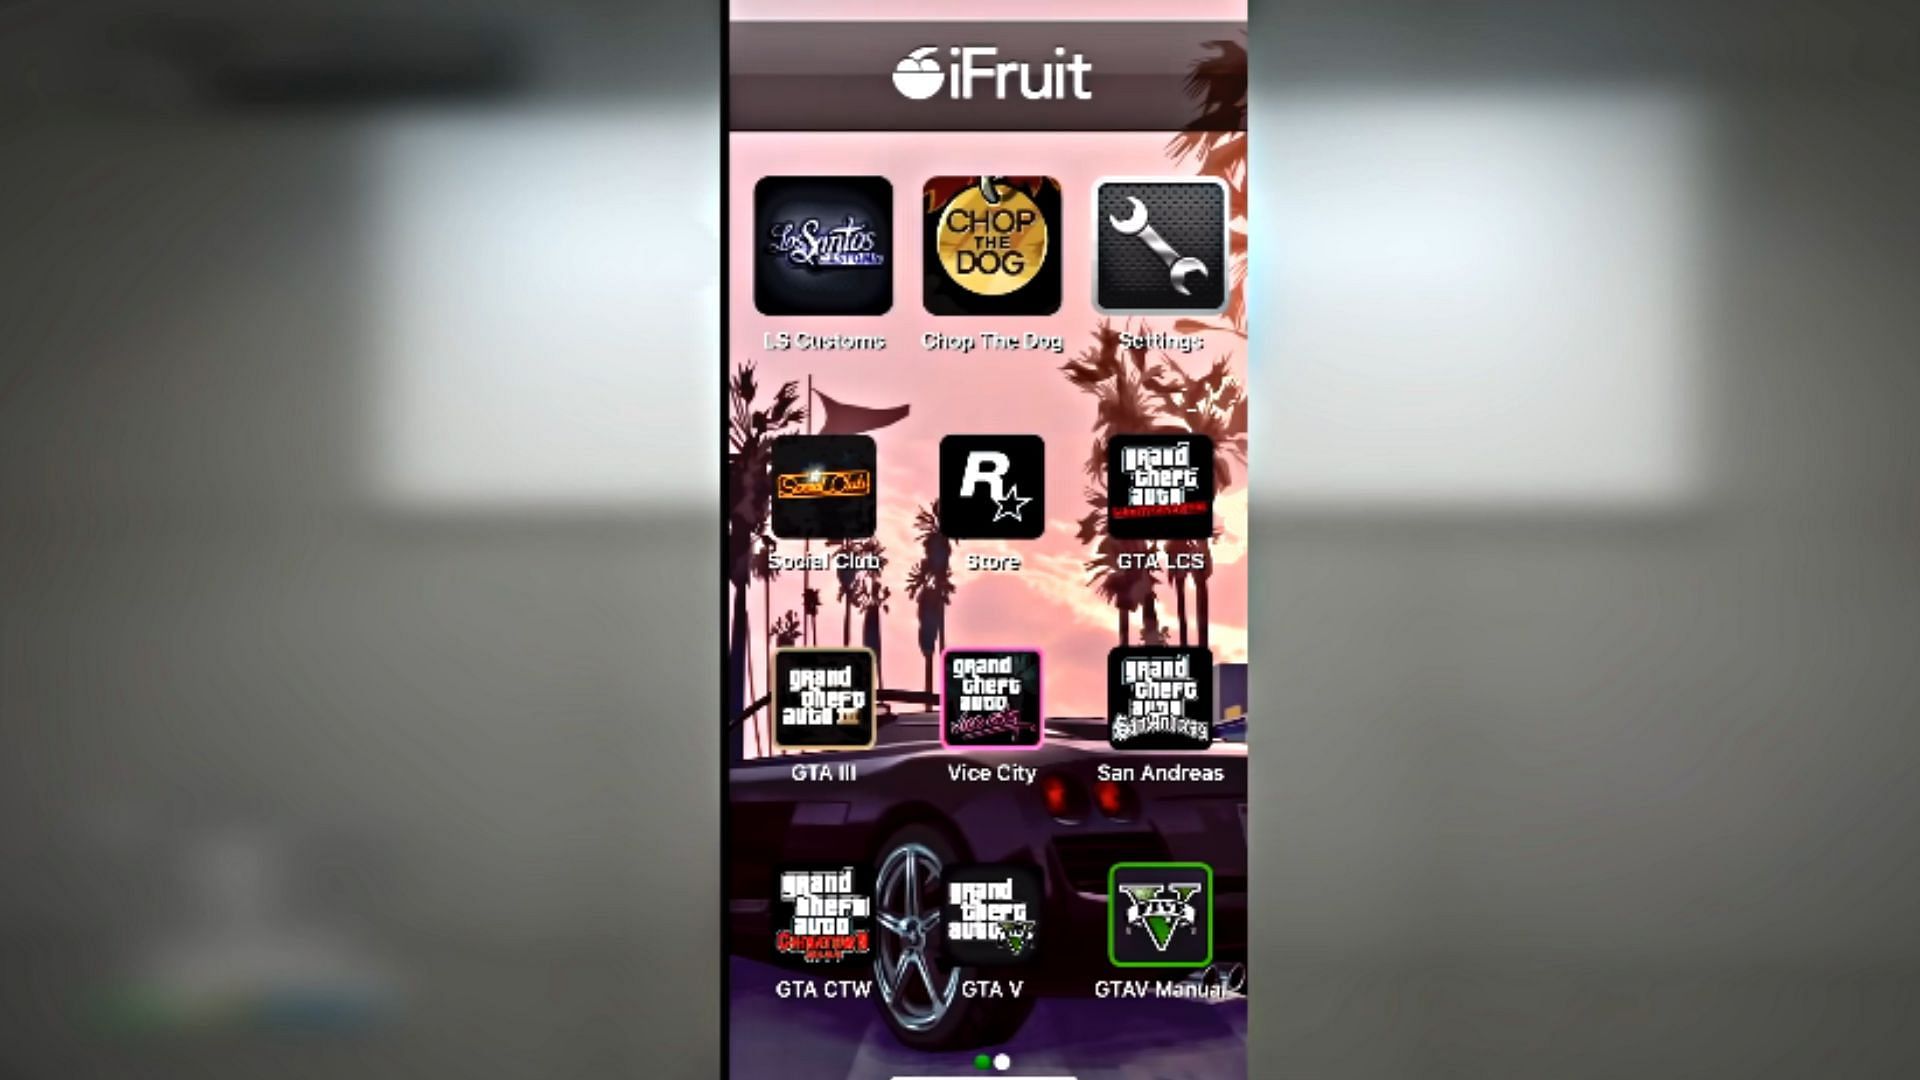 GTA Online iFruit app alternative is finally coming as License Plate  Creator this week